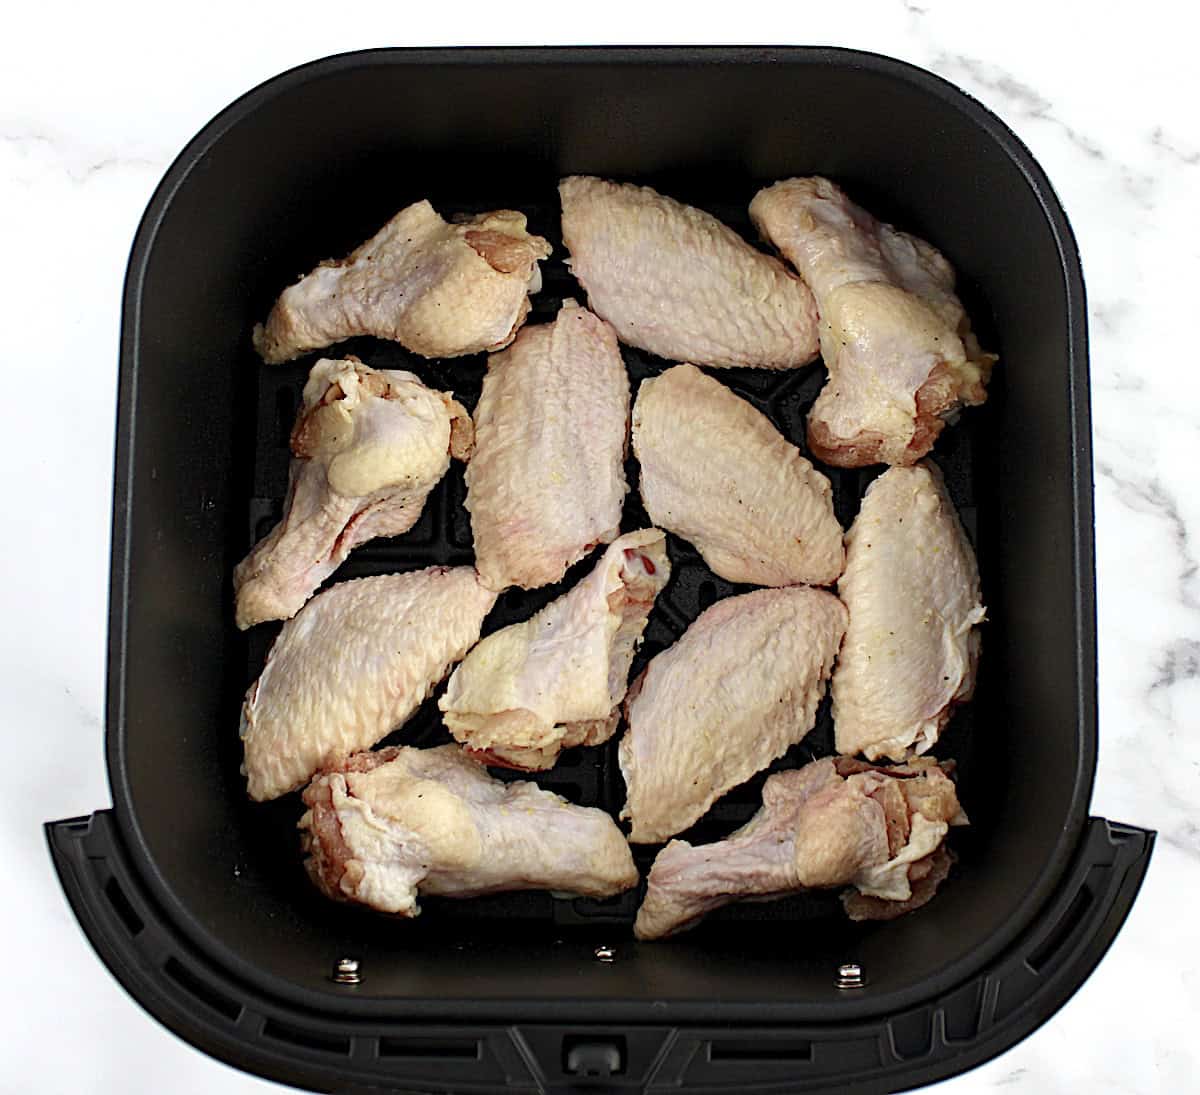 12 raw chicken wings in air fryer basket